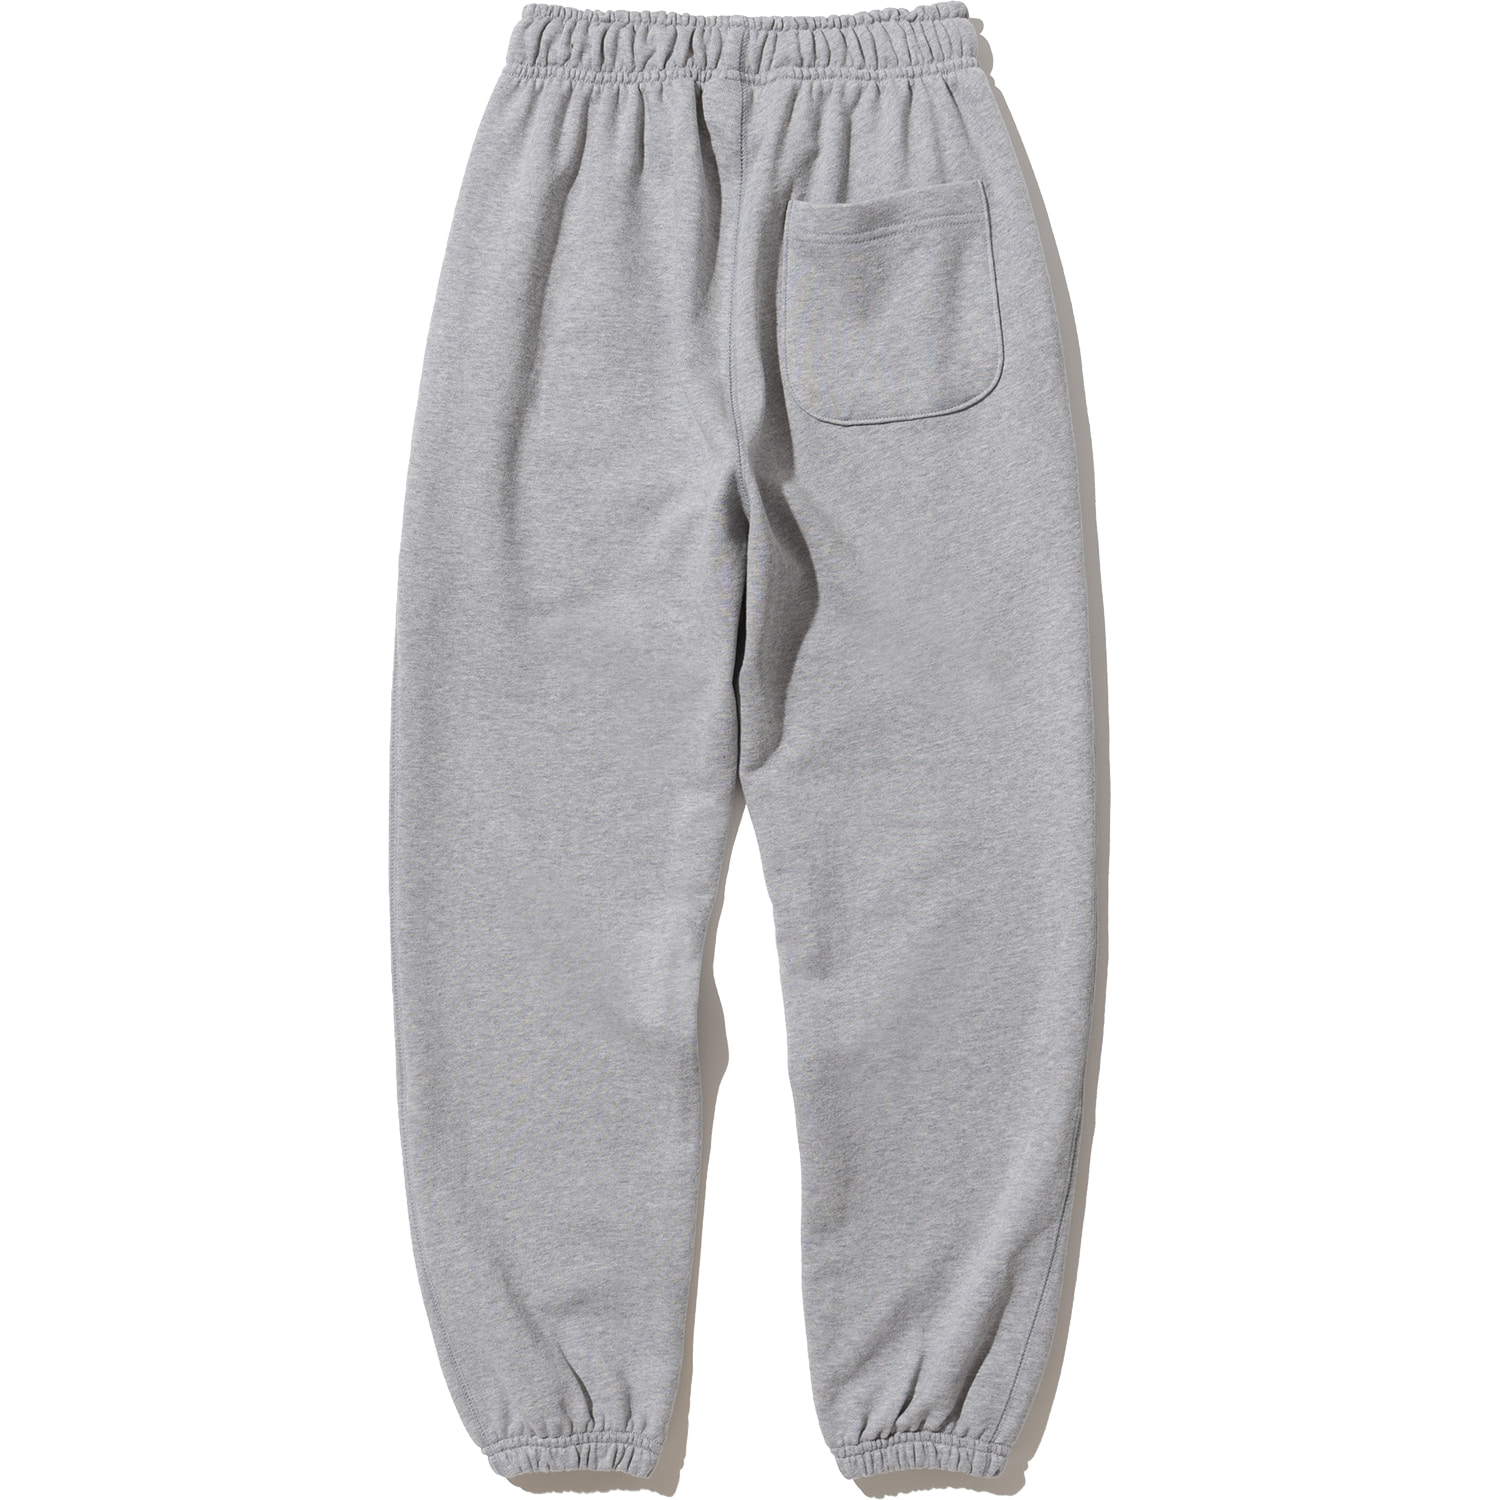 Sweat Jogger Pants - Grey,NOT4NERD